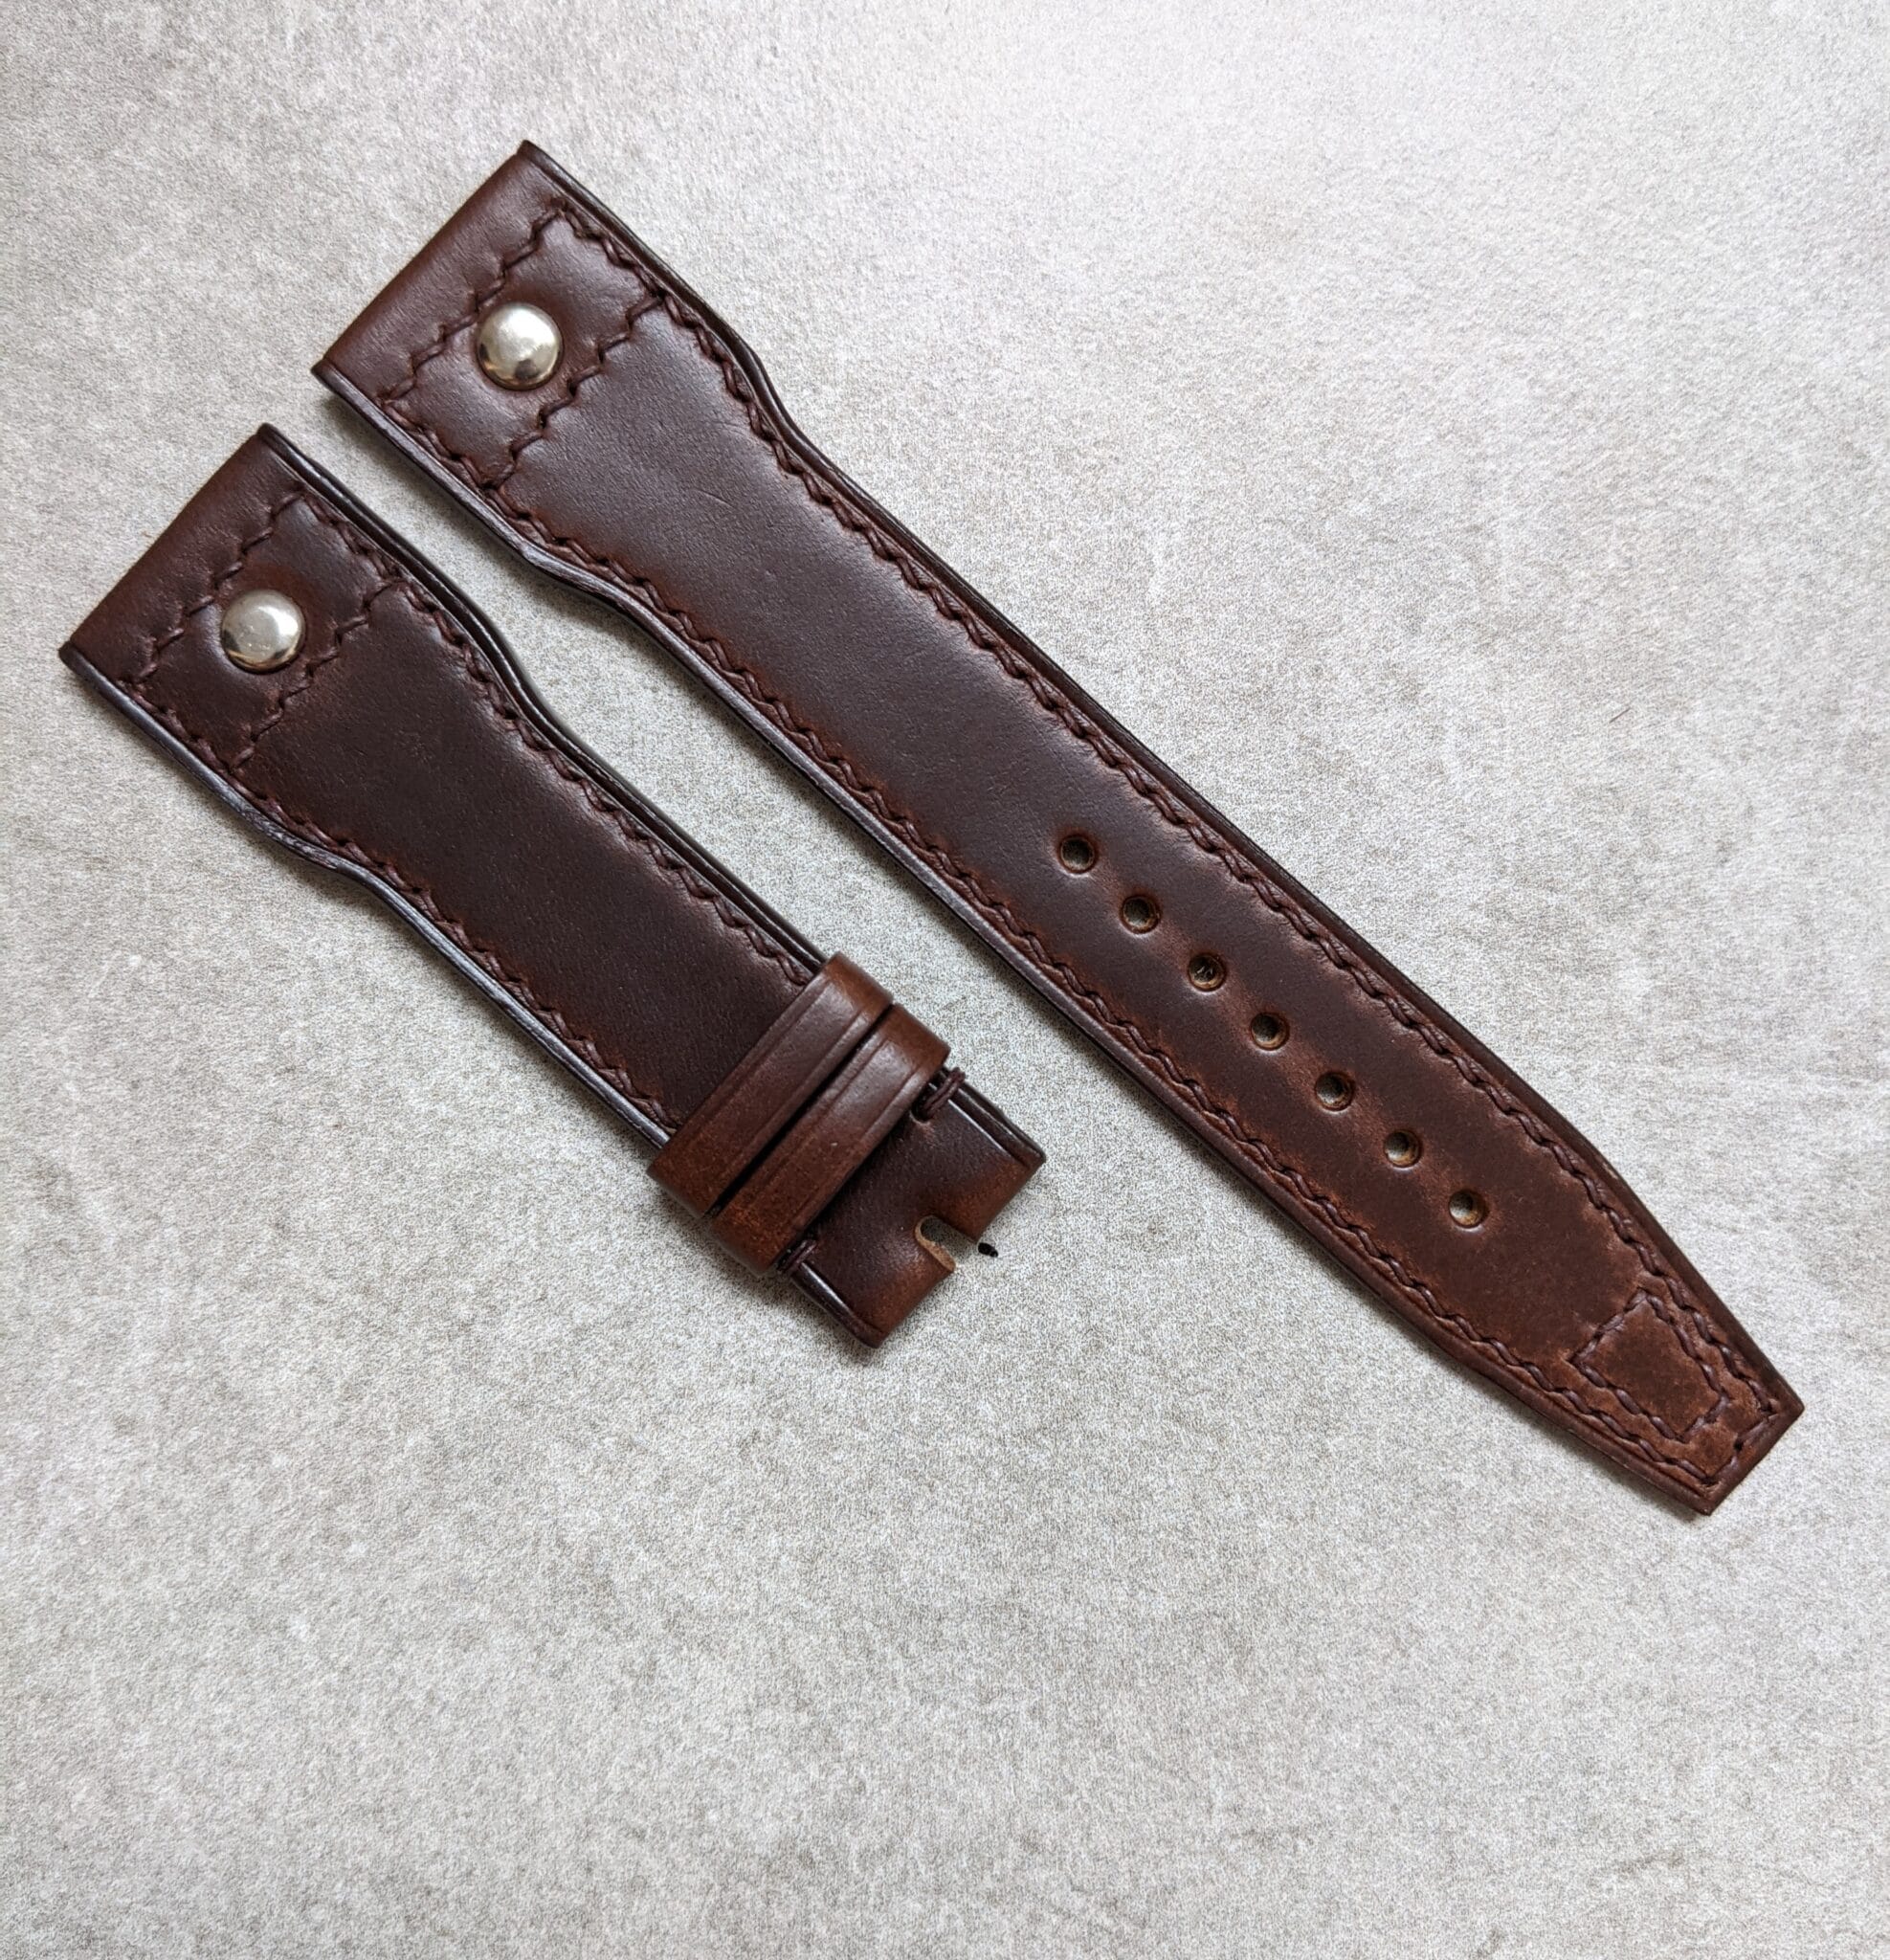 iwc-watch-strap-chocolate-brown